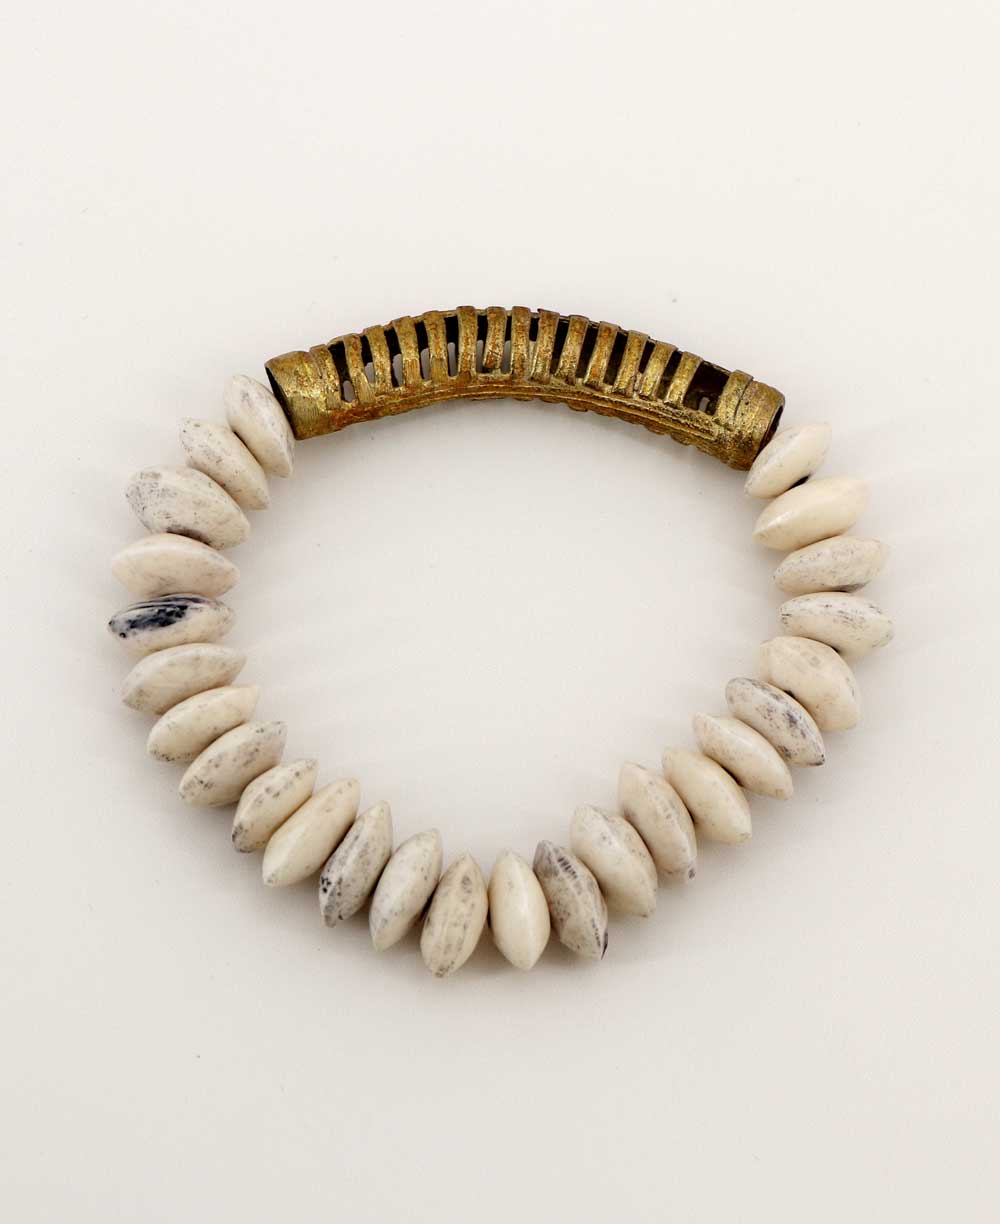 Handmade rustic clay bead bracelet